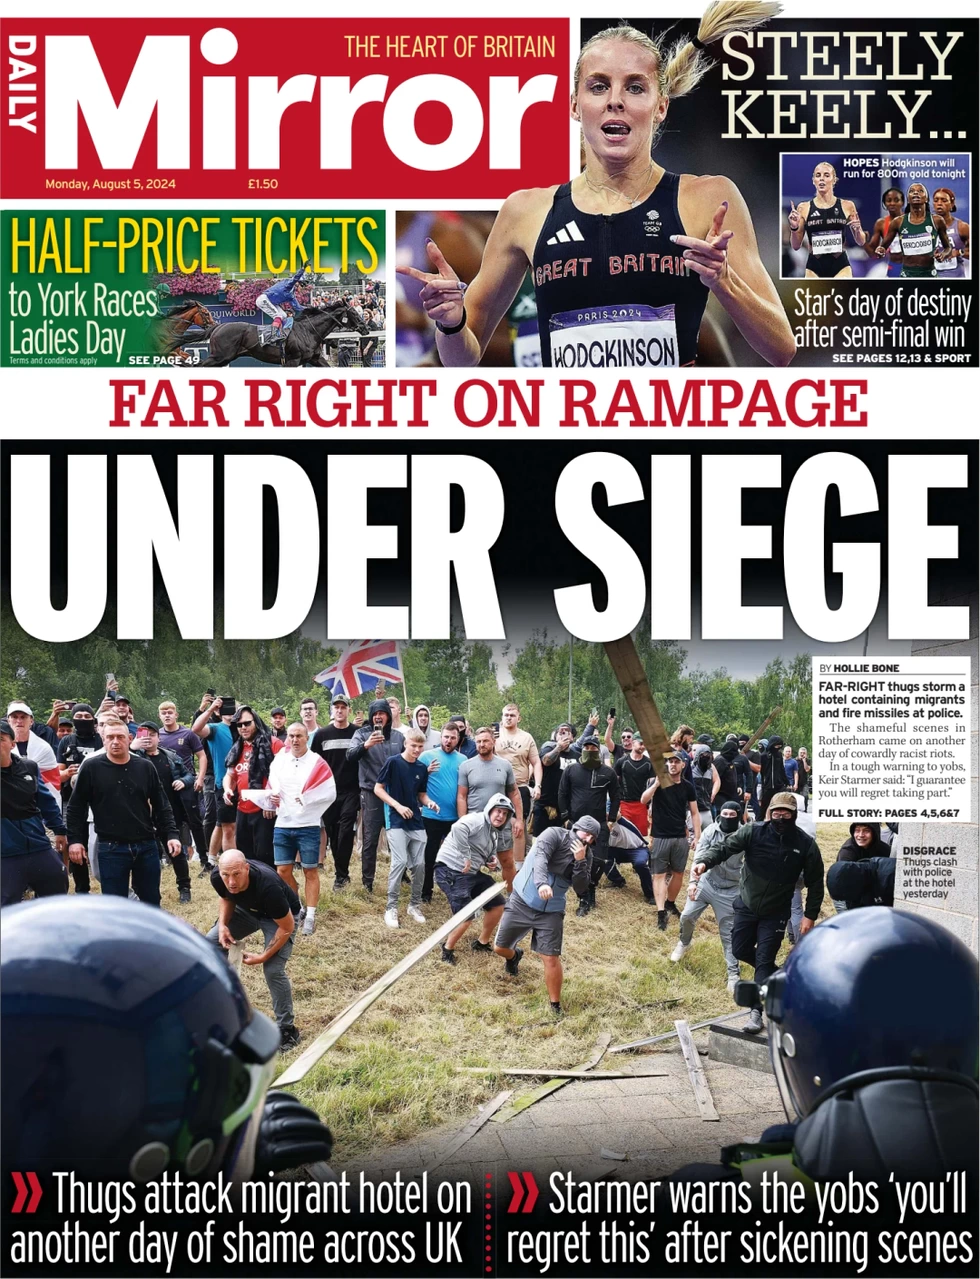 Daily Mirror - Far right on rampage: Under siege 
